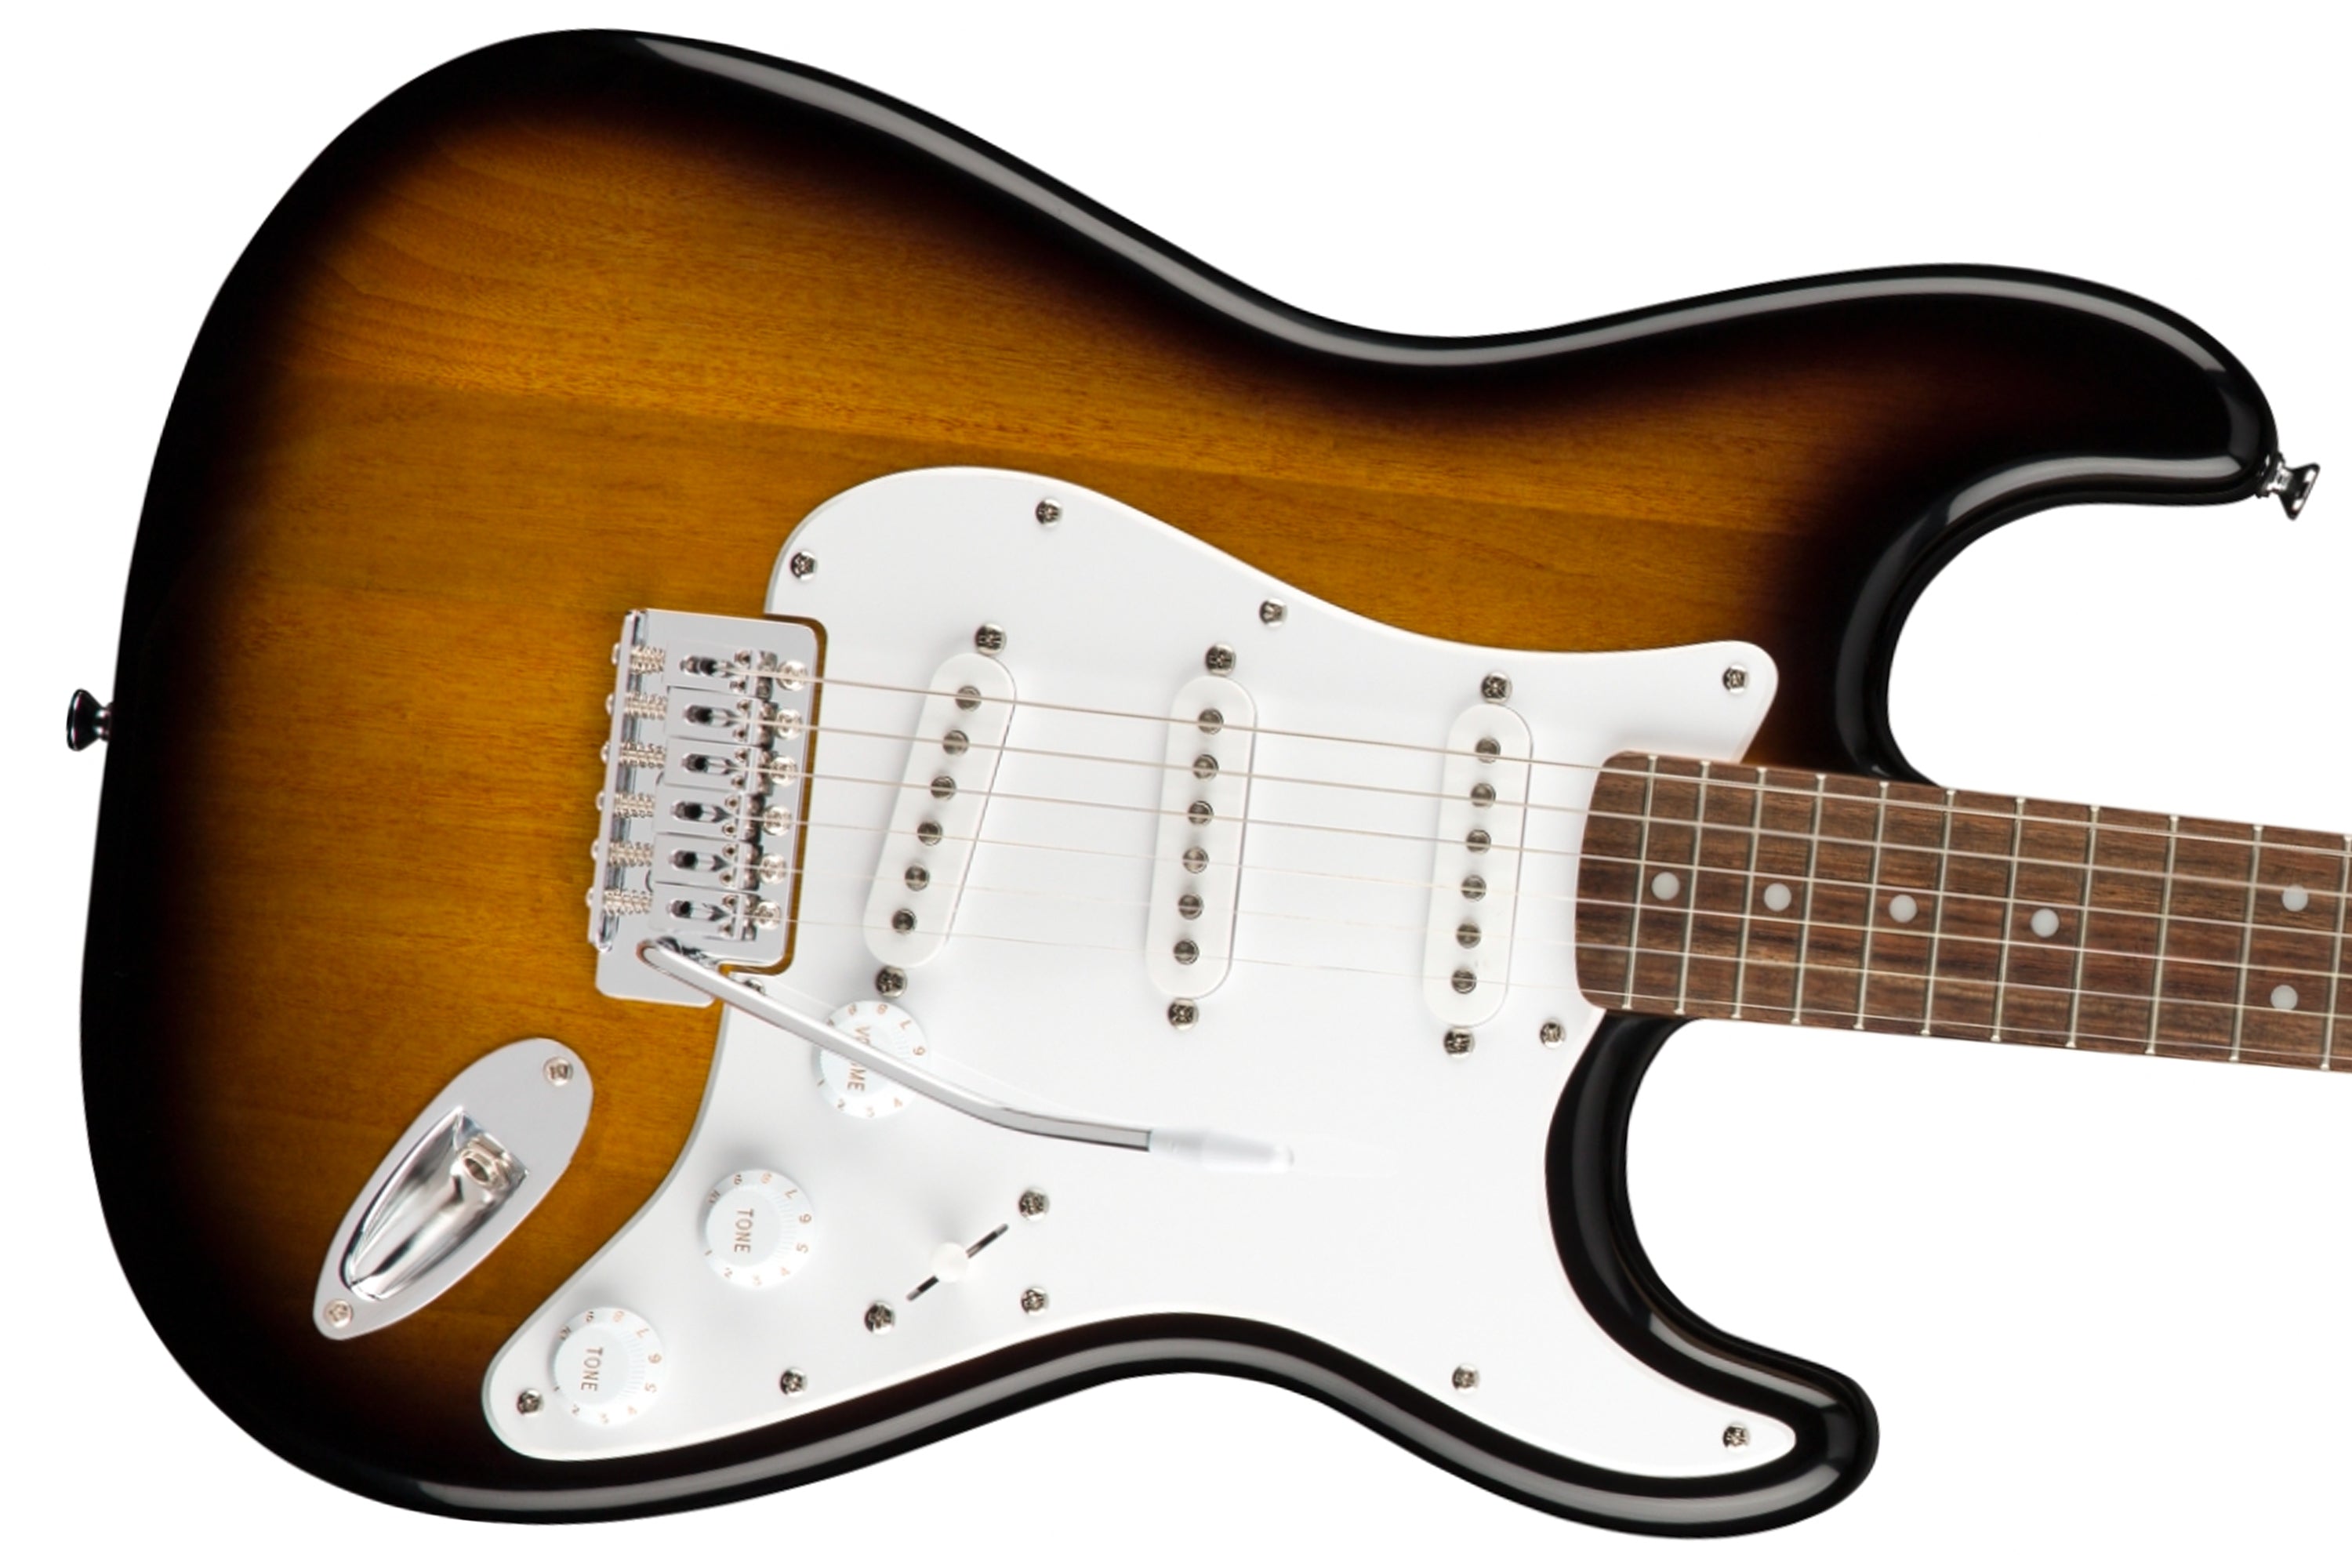 Squier By Fender Stratocaster Guitar Pack - Brown Sunburst